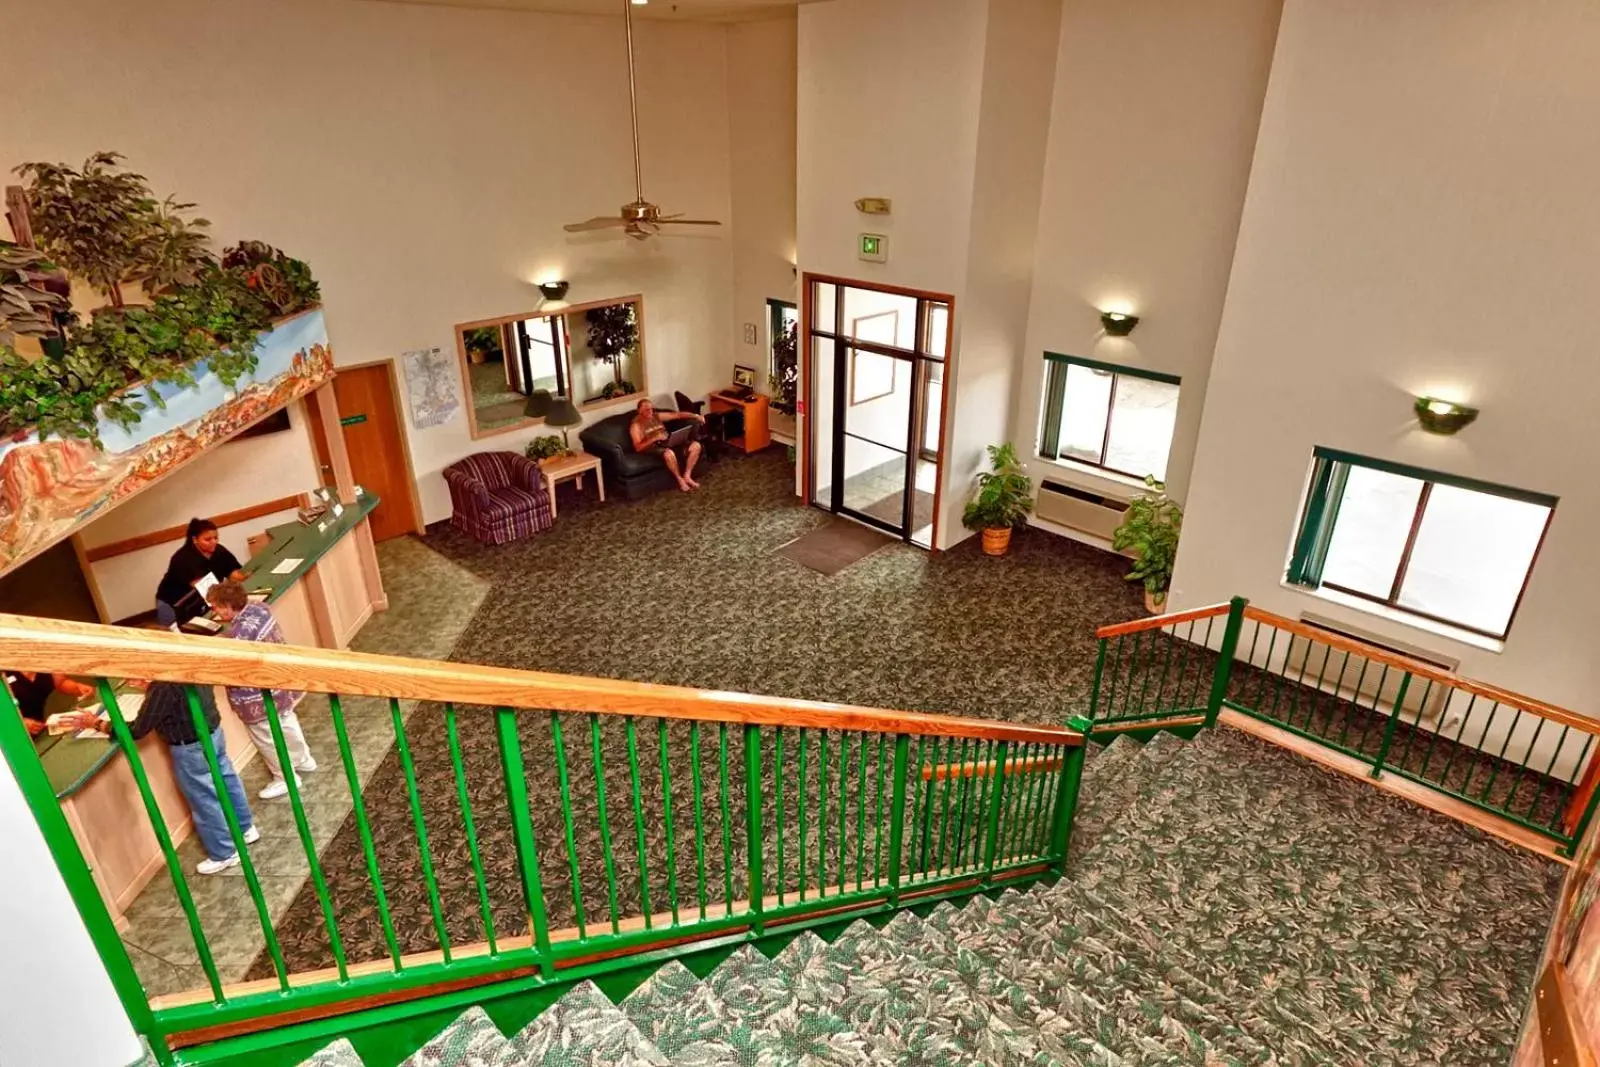 Lobby or reception in Arch Canyon Inn